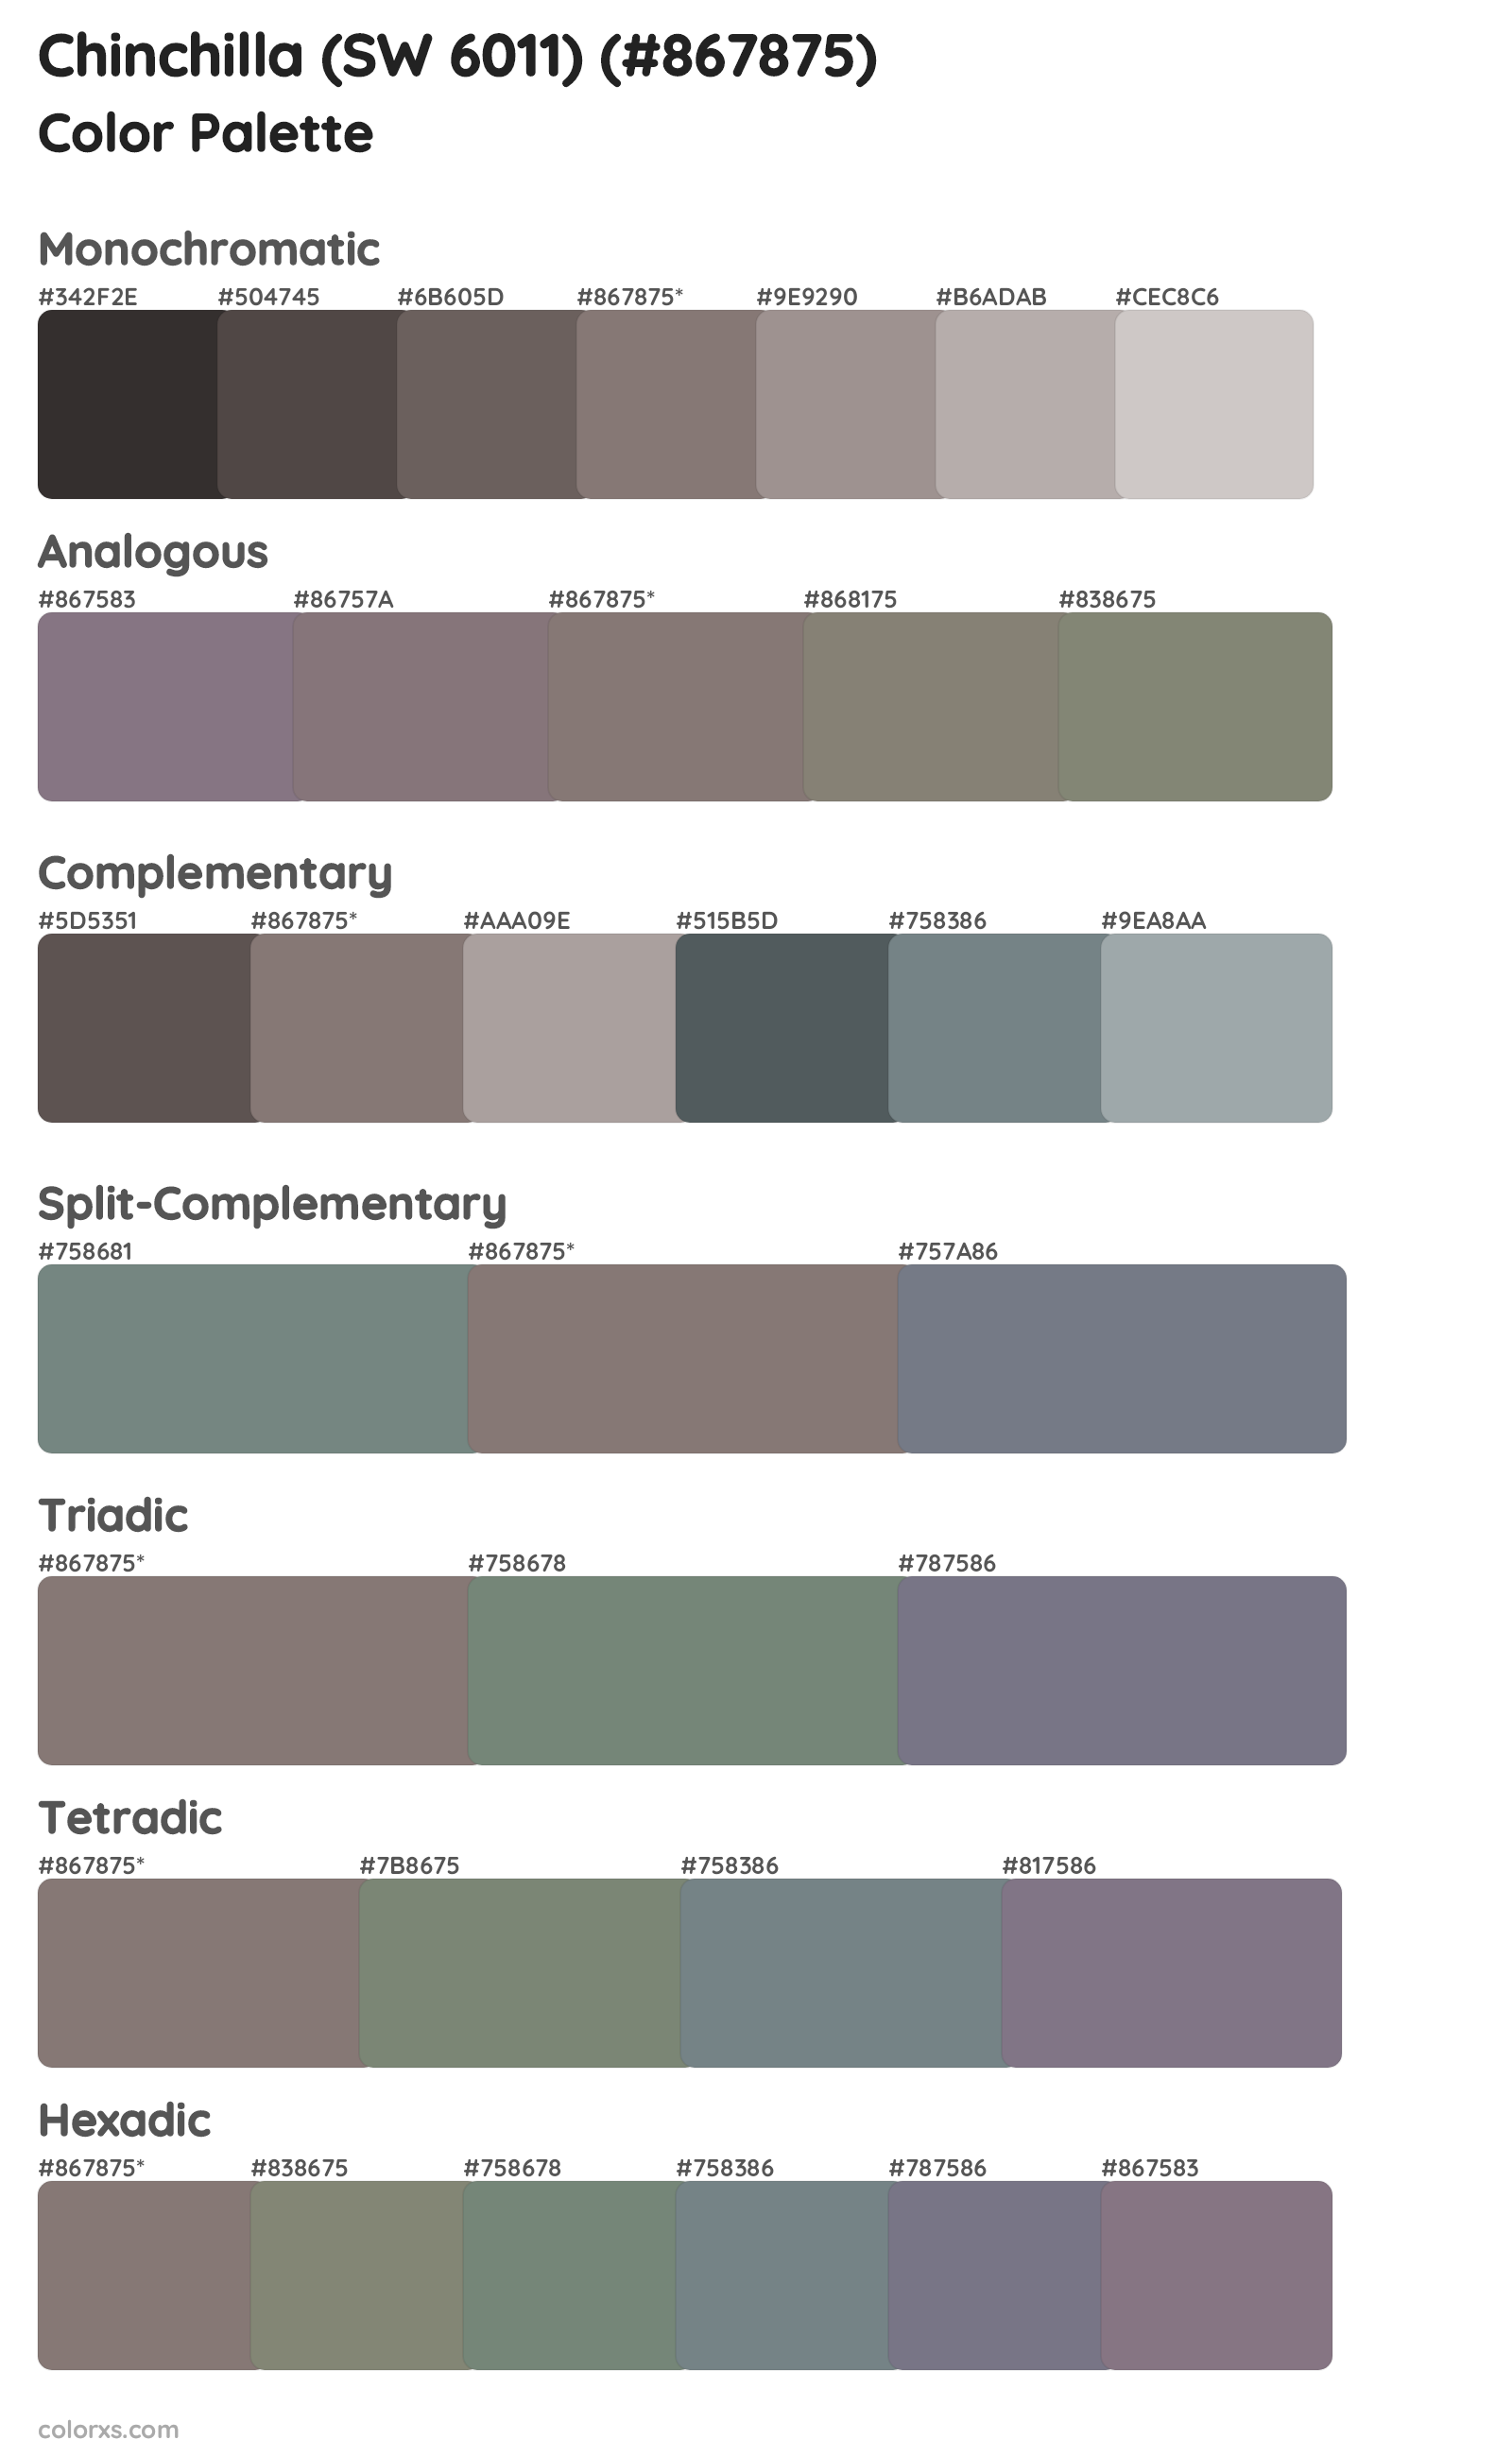 Chinchilla (SW 6011) Color Scheme Palettes